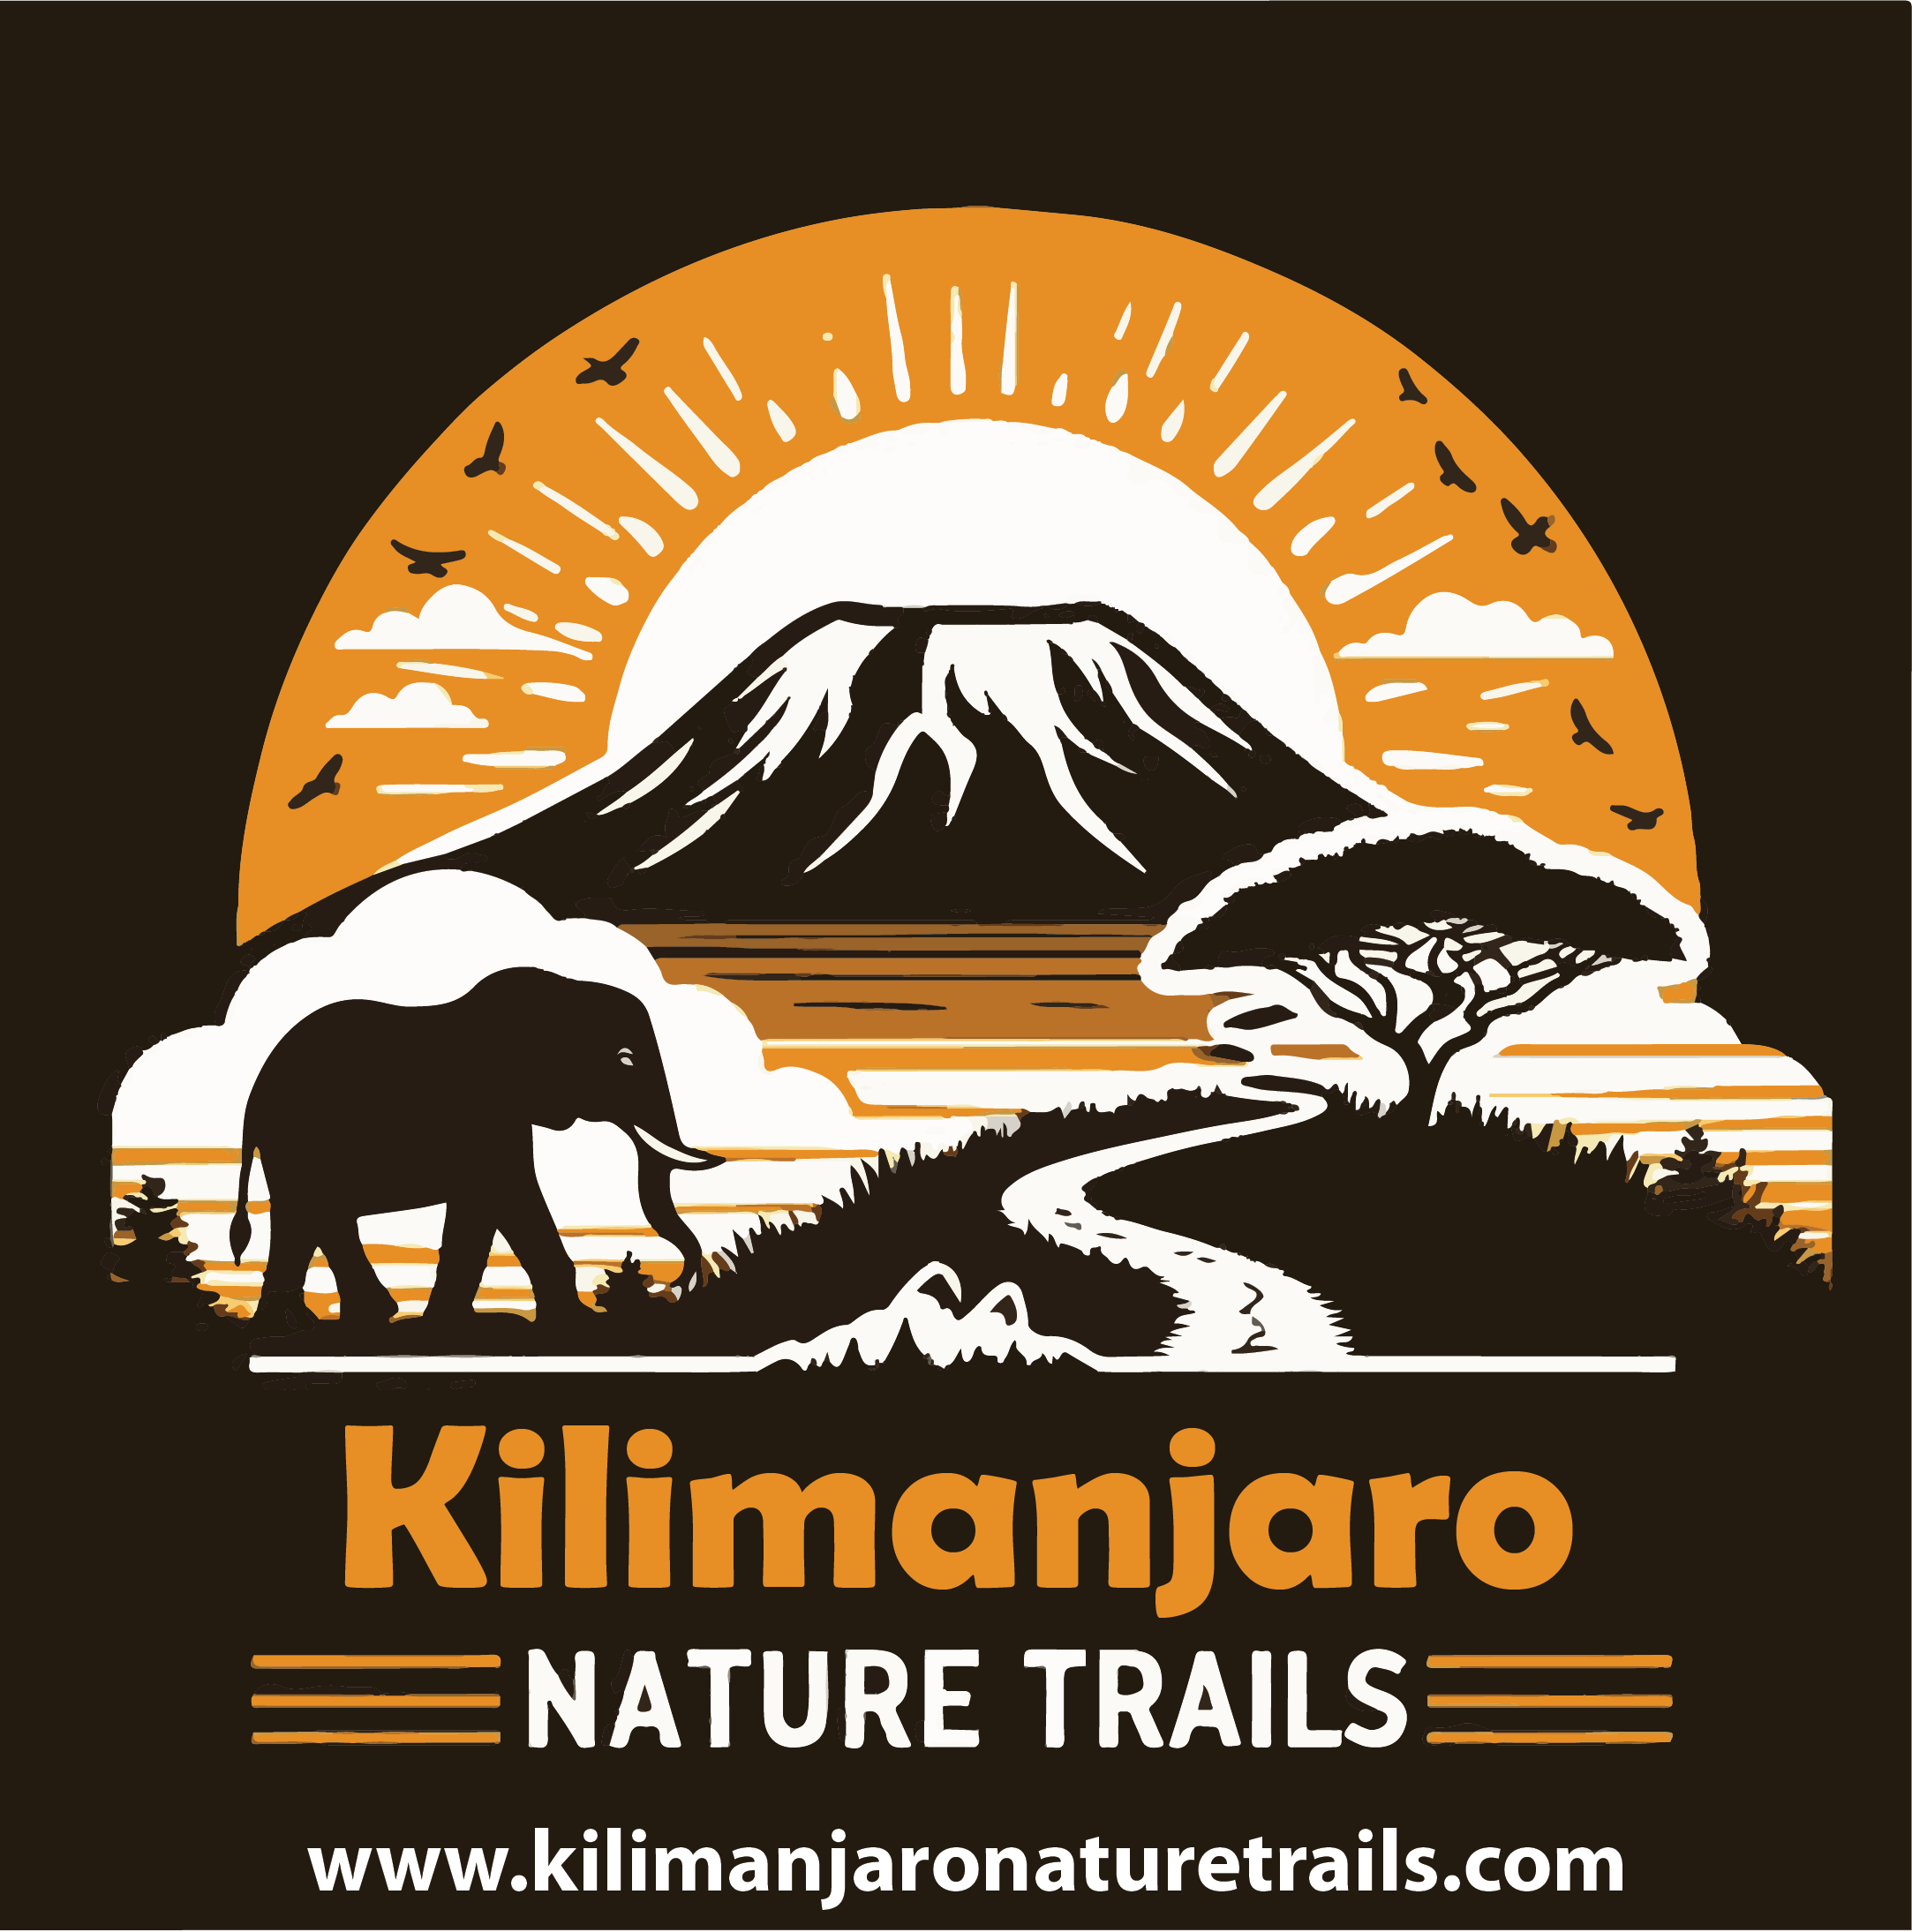 Kilimanjaro Nature Trail – Best Kilimanjaro and Safaris Tour operator in Tanzania